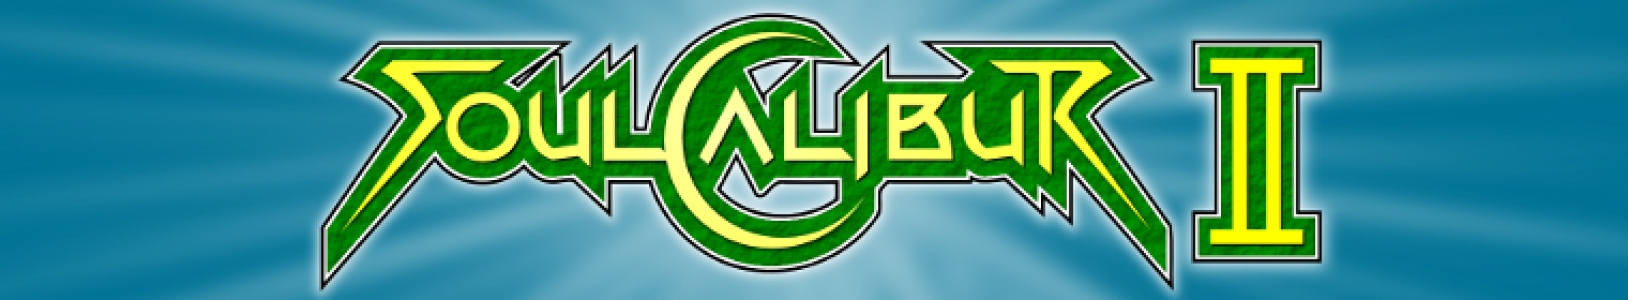 SoulCalibur II banner